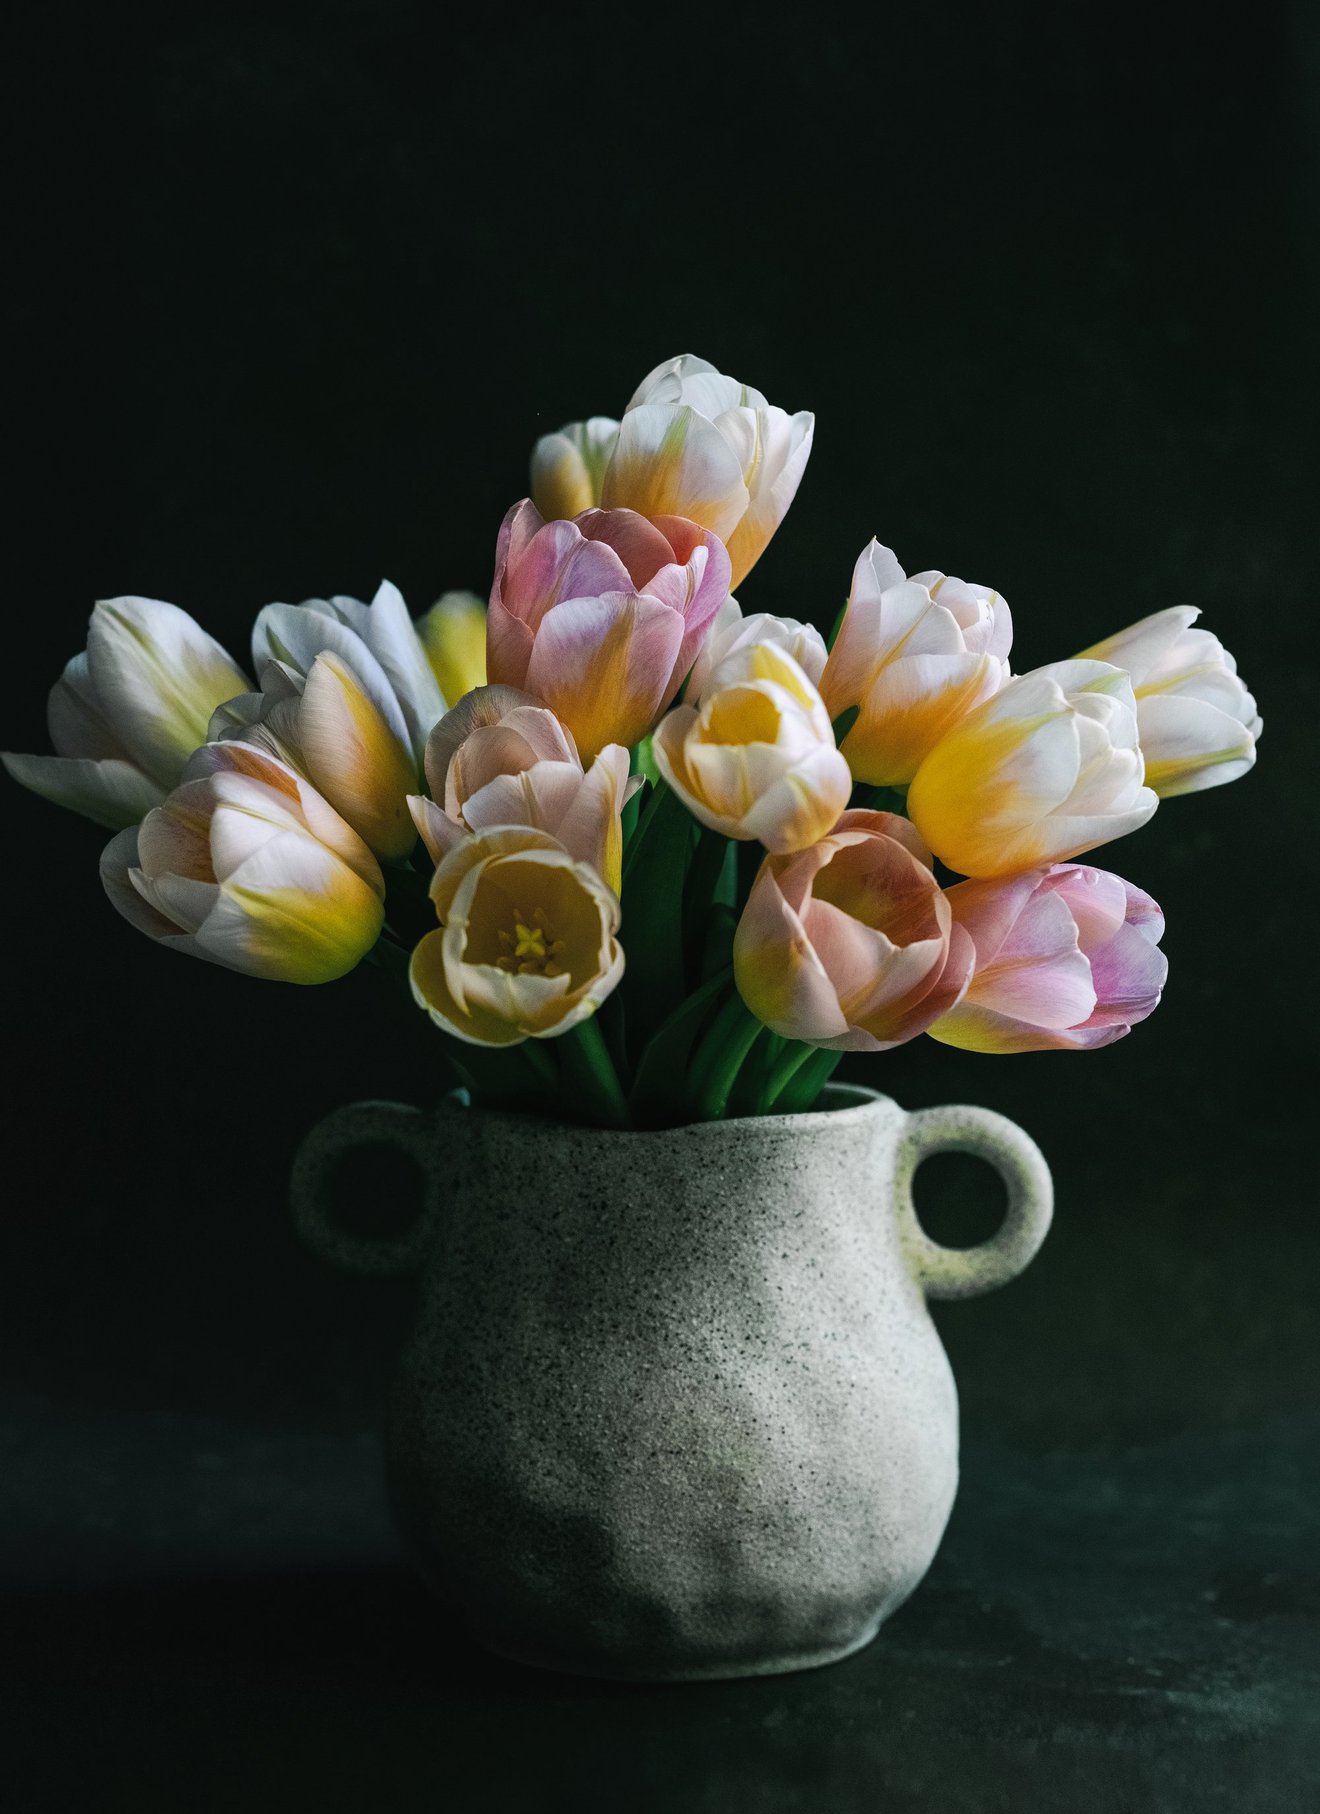  My tulips -Seed Nft